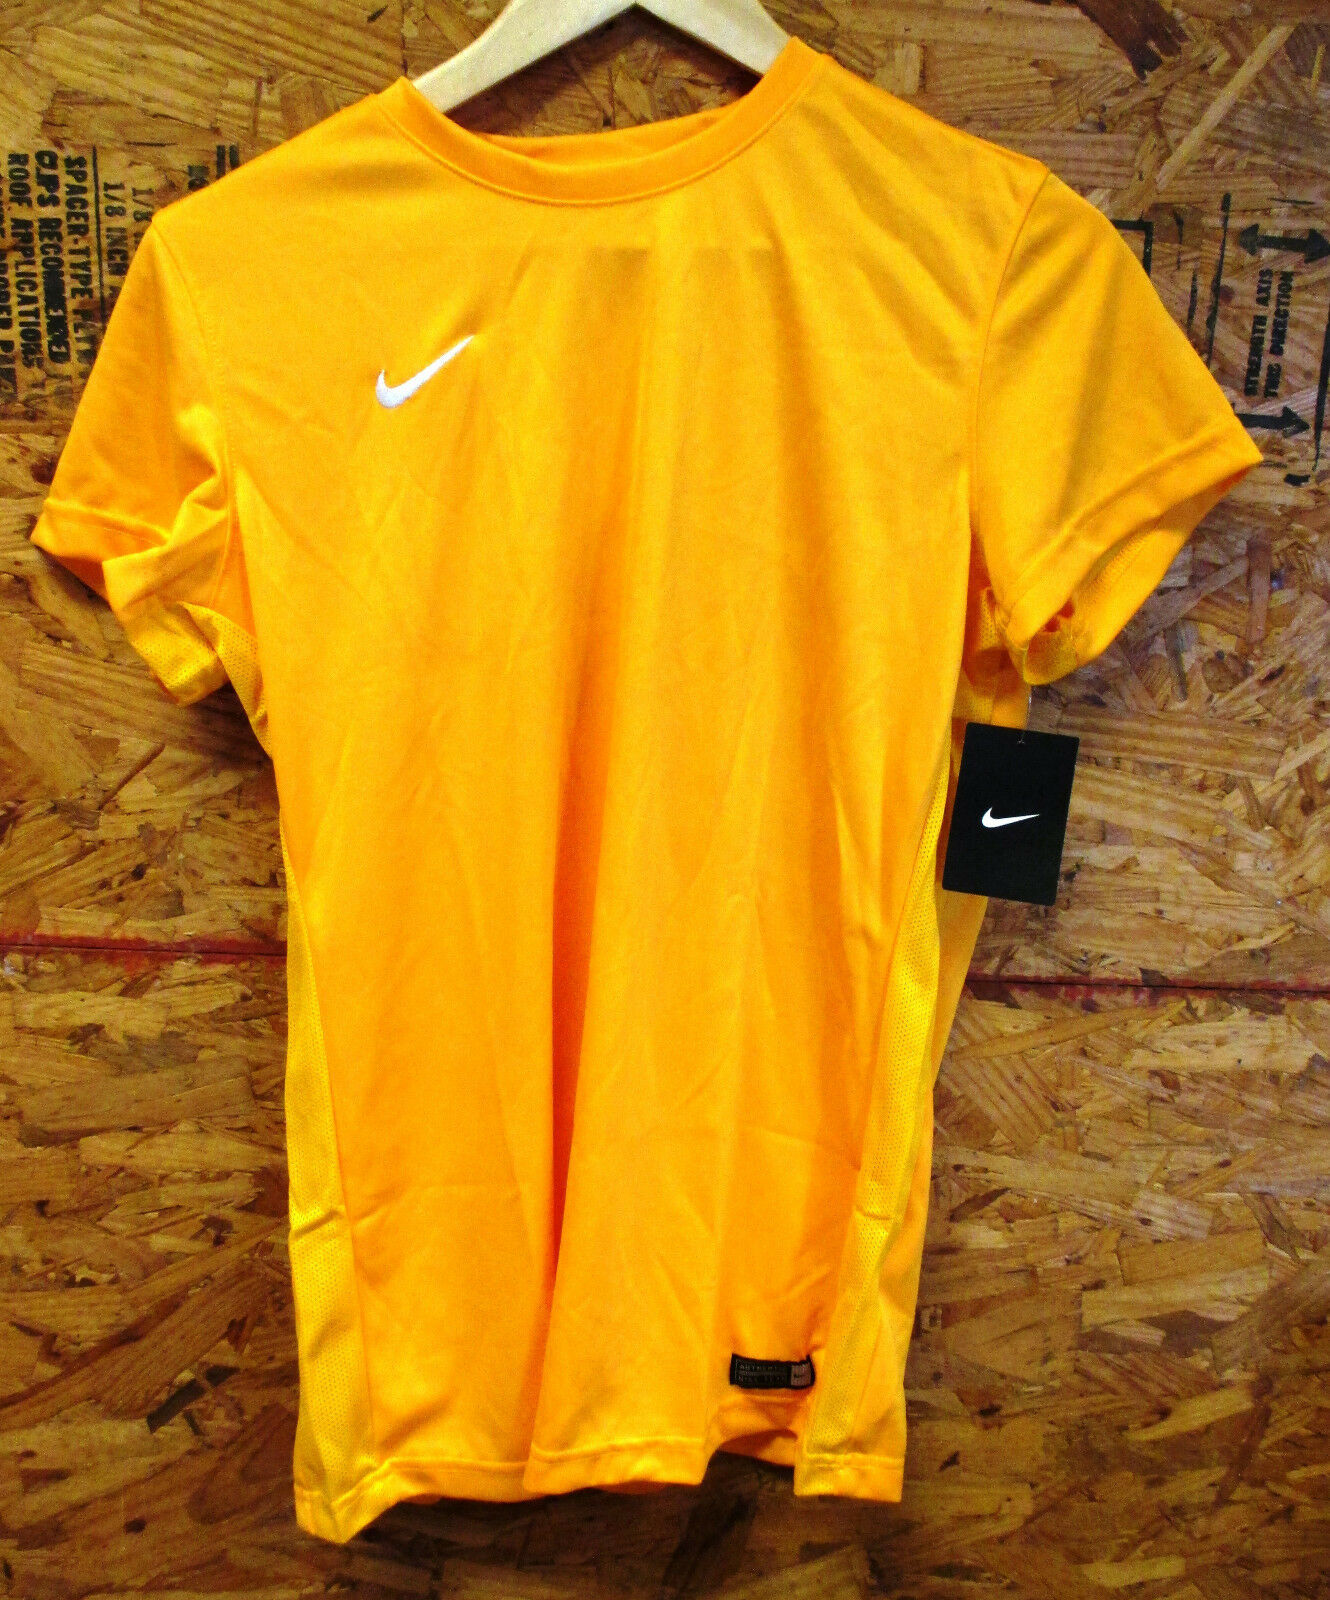 Nike Femmes Tiempo II Manche Courte Football Jersey, Jaune, XL / Couleur 739 - $9.37